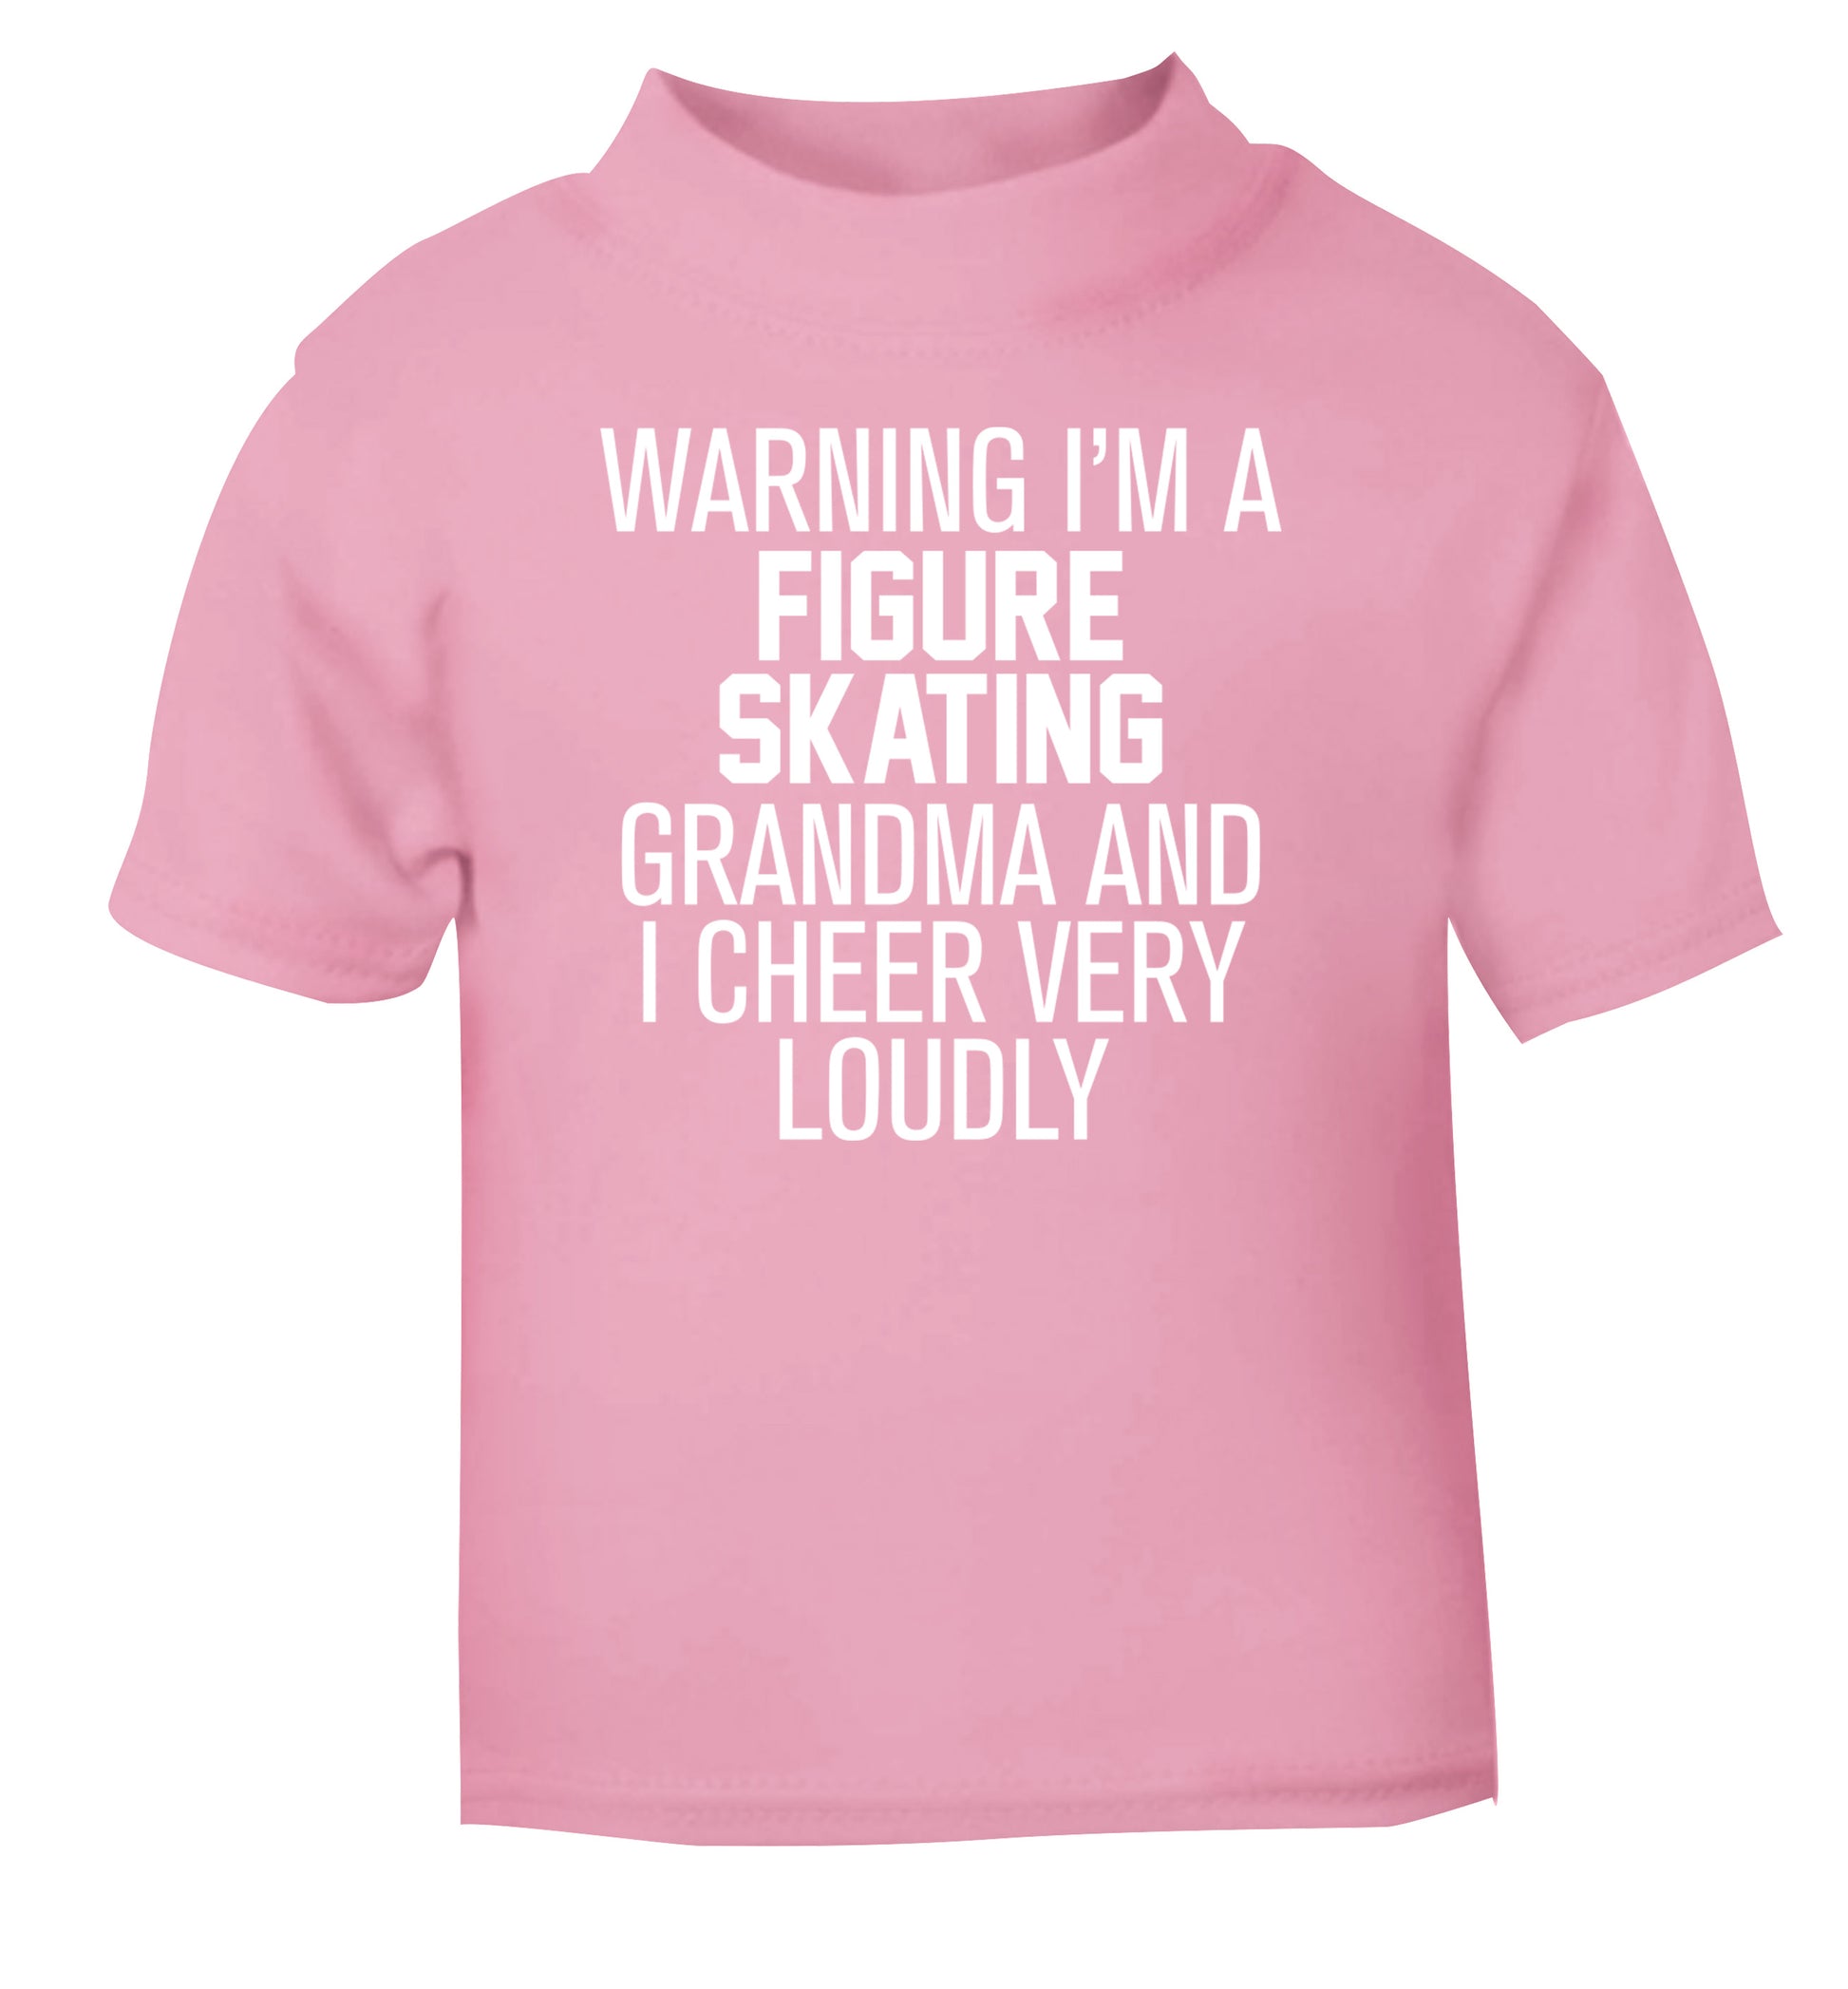 Warning I'm a figure skating grandma and I cheer very loudly light pink Baby Toddler Tshirt 2 Years